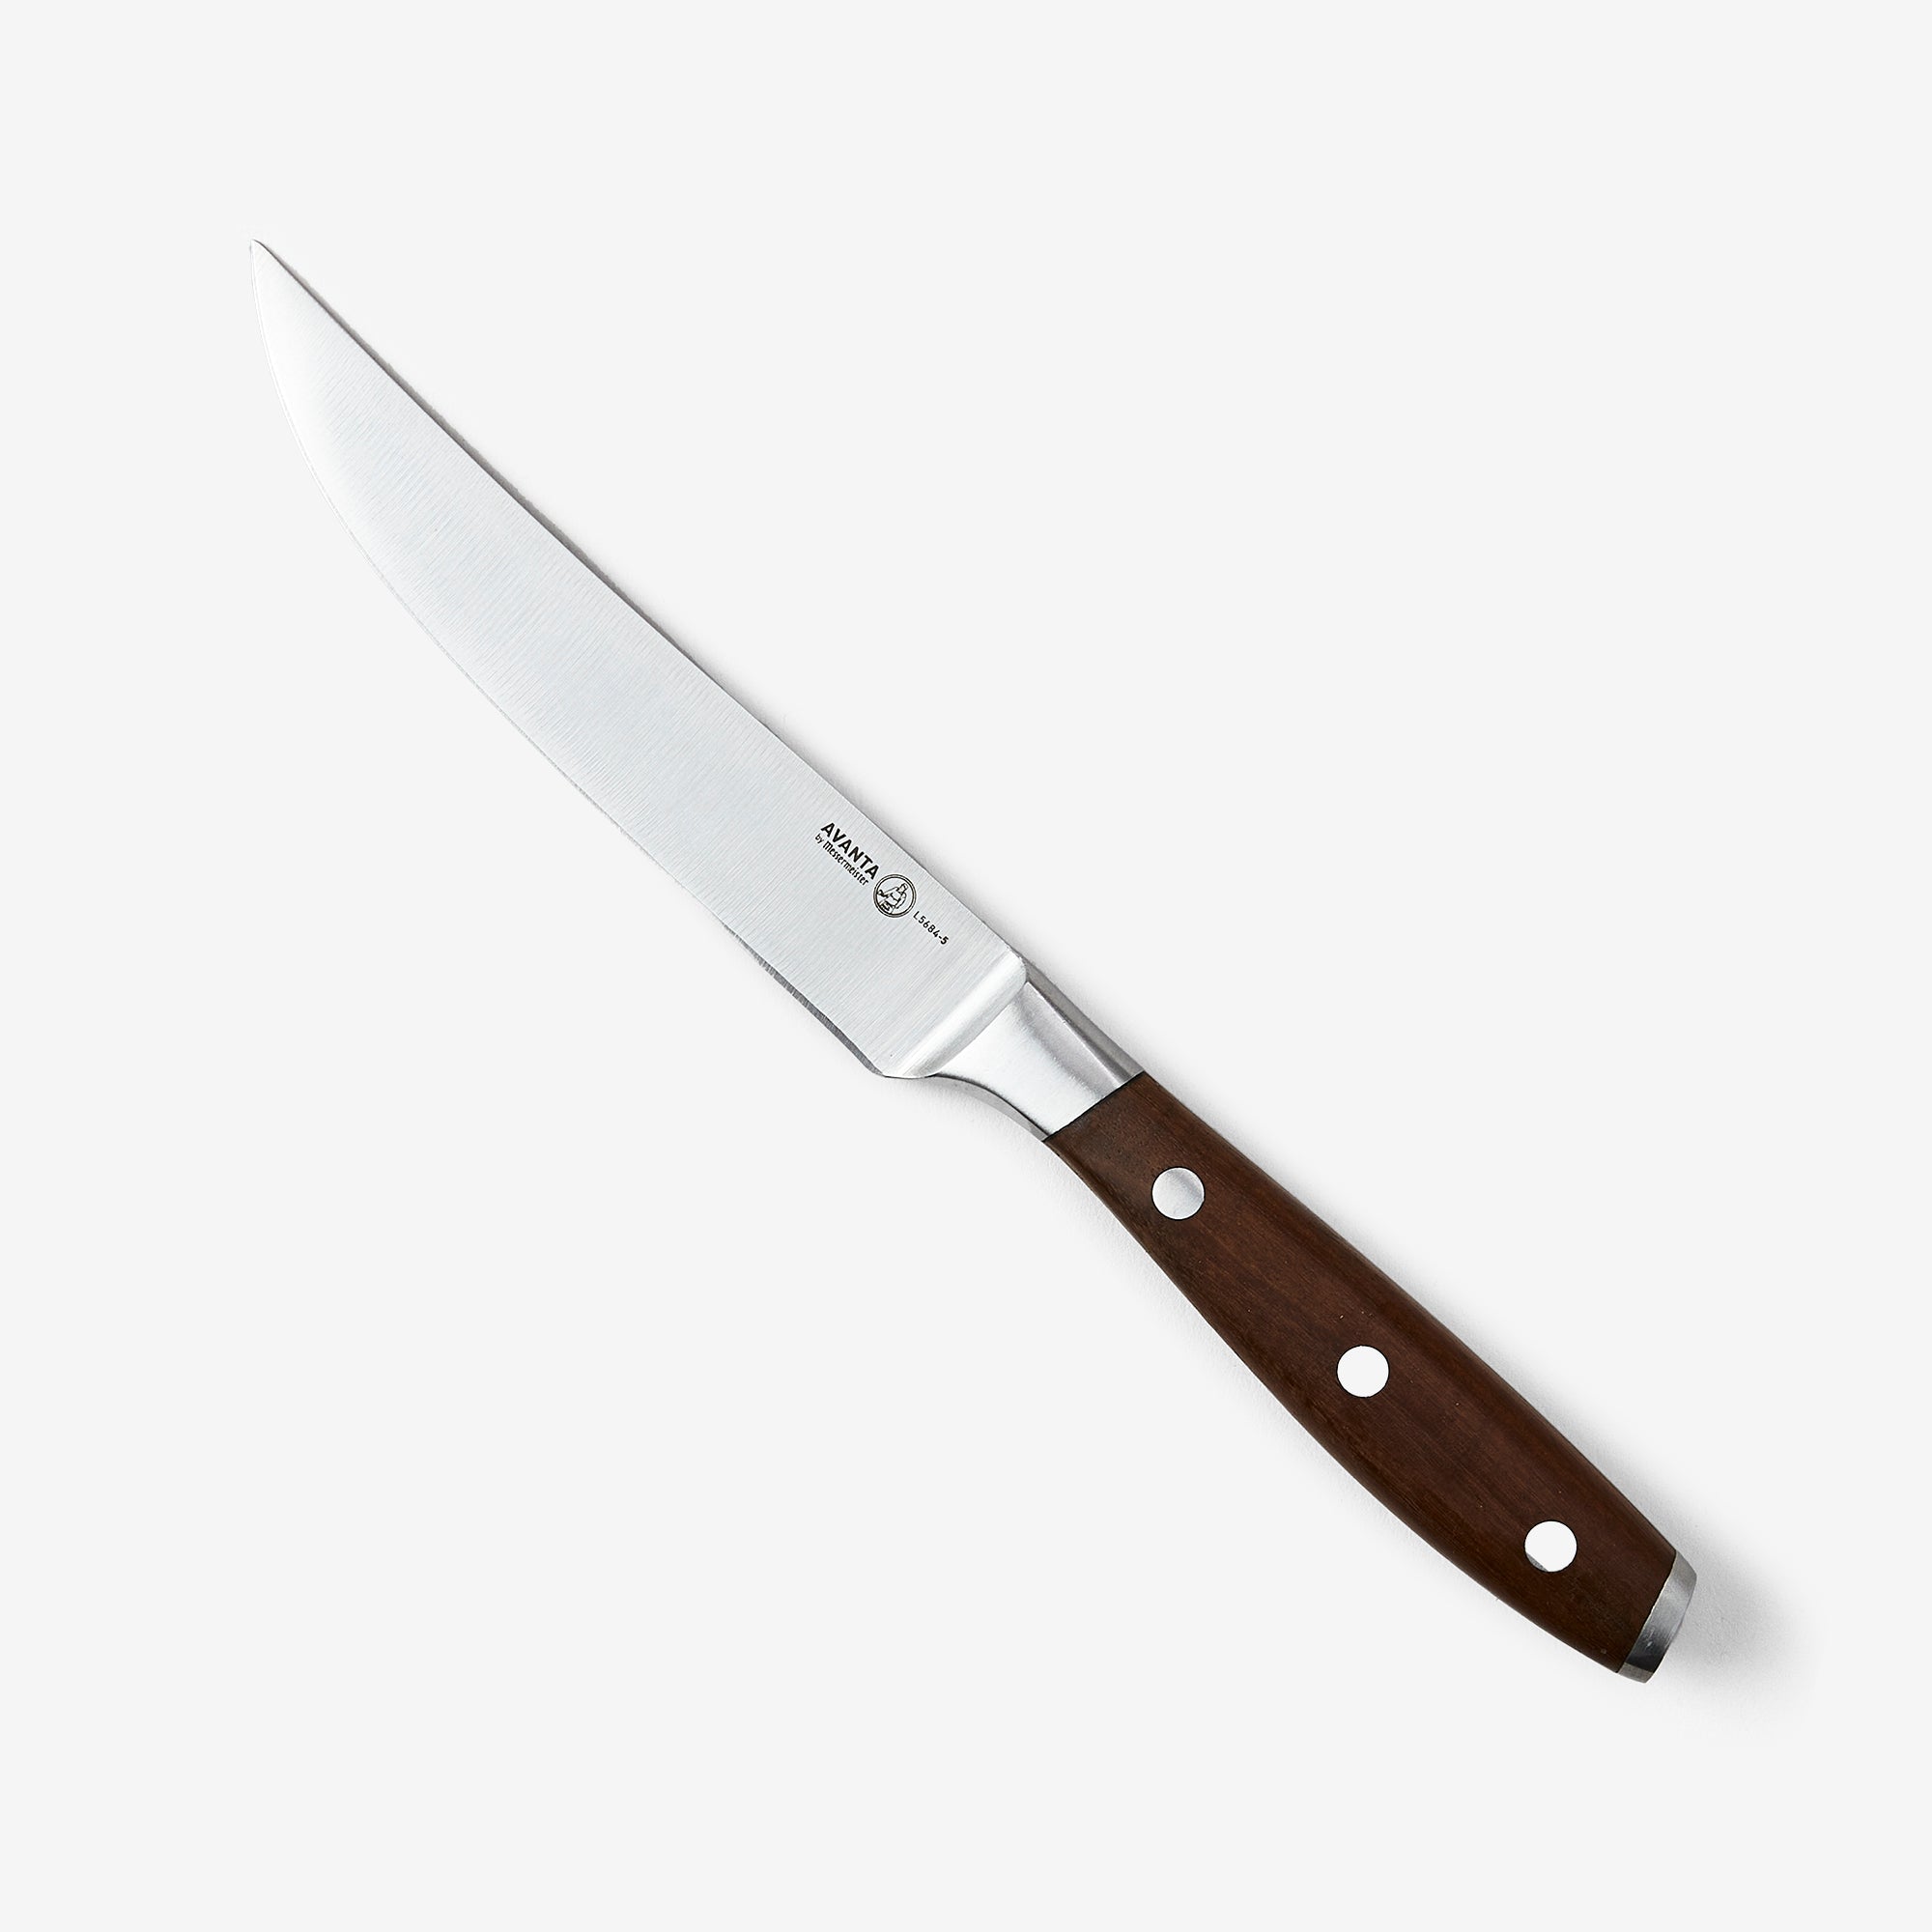 Messermeister MFK-864 Folding Steak Knife - Carbonized Cherry